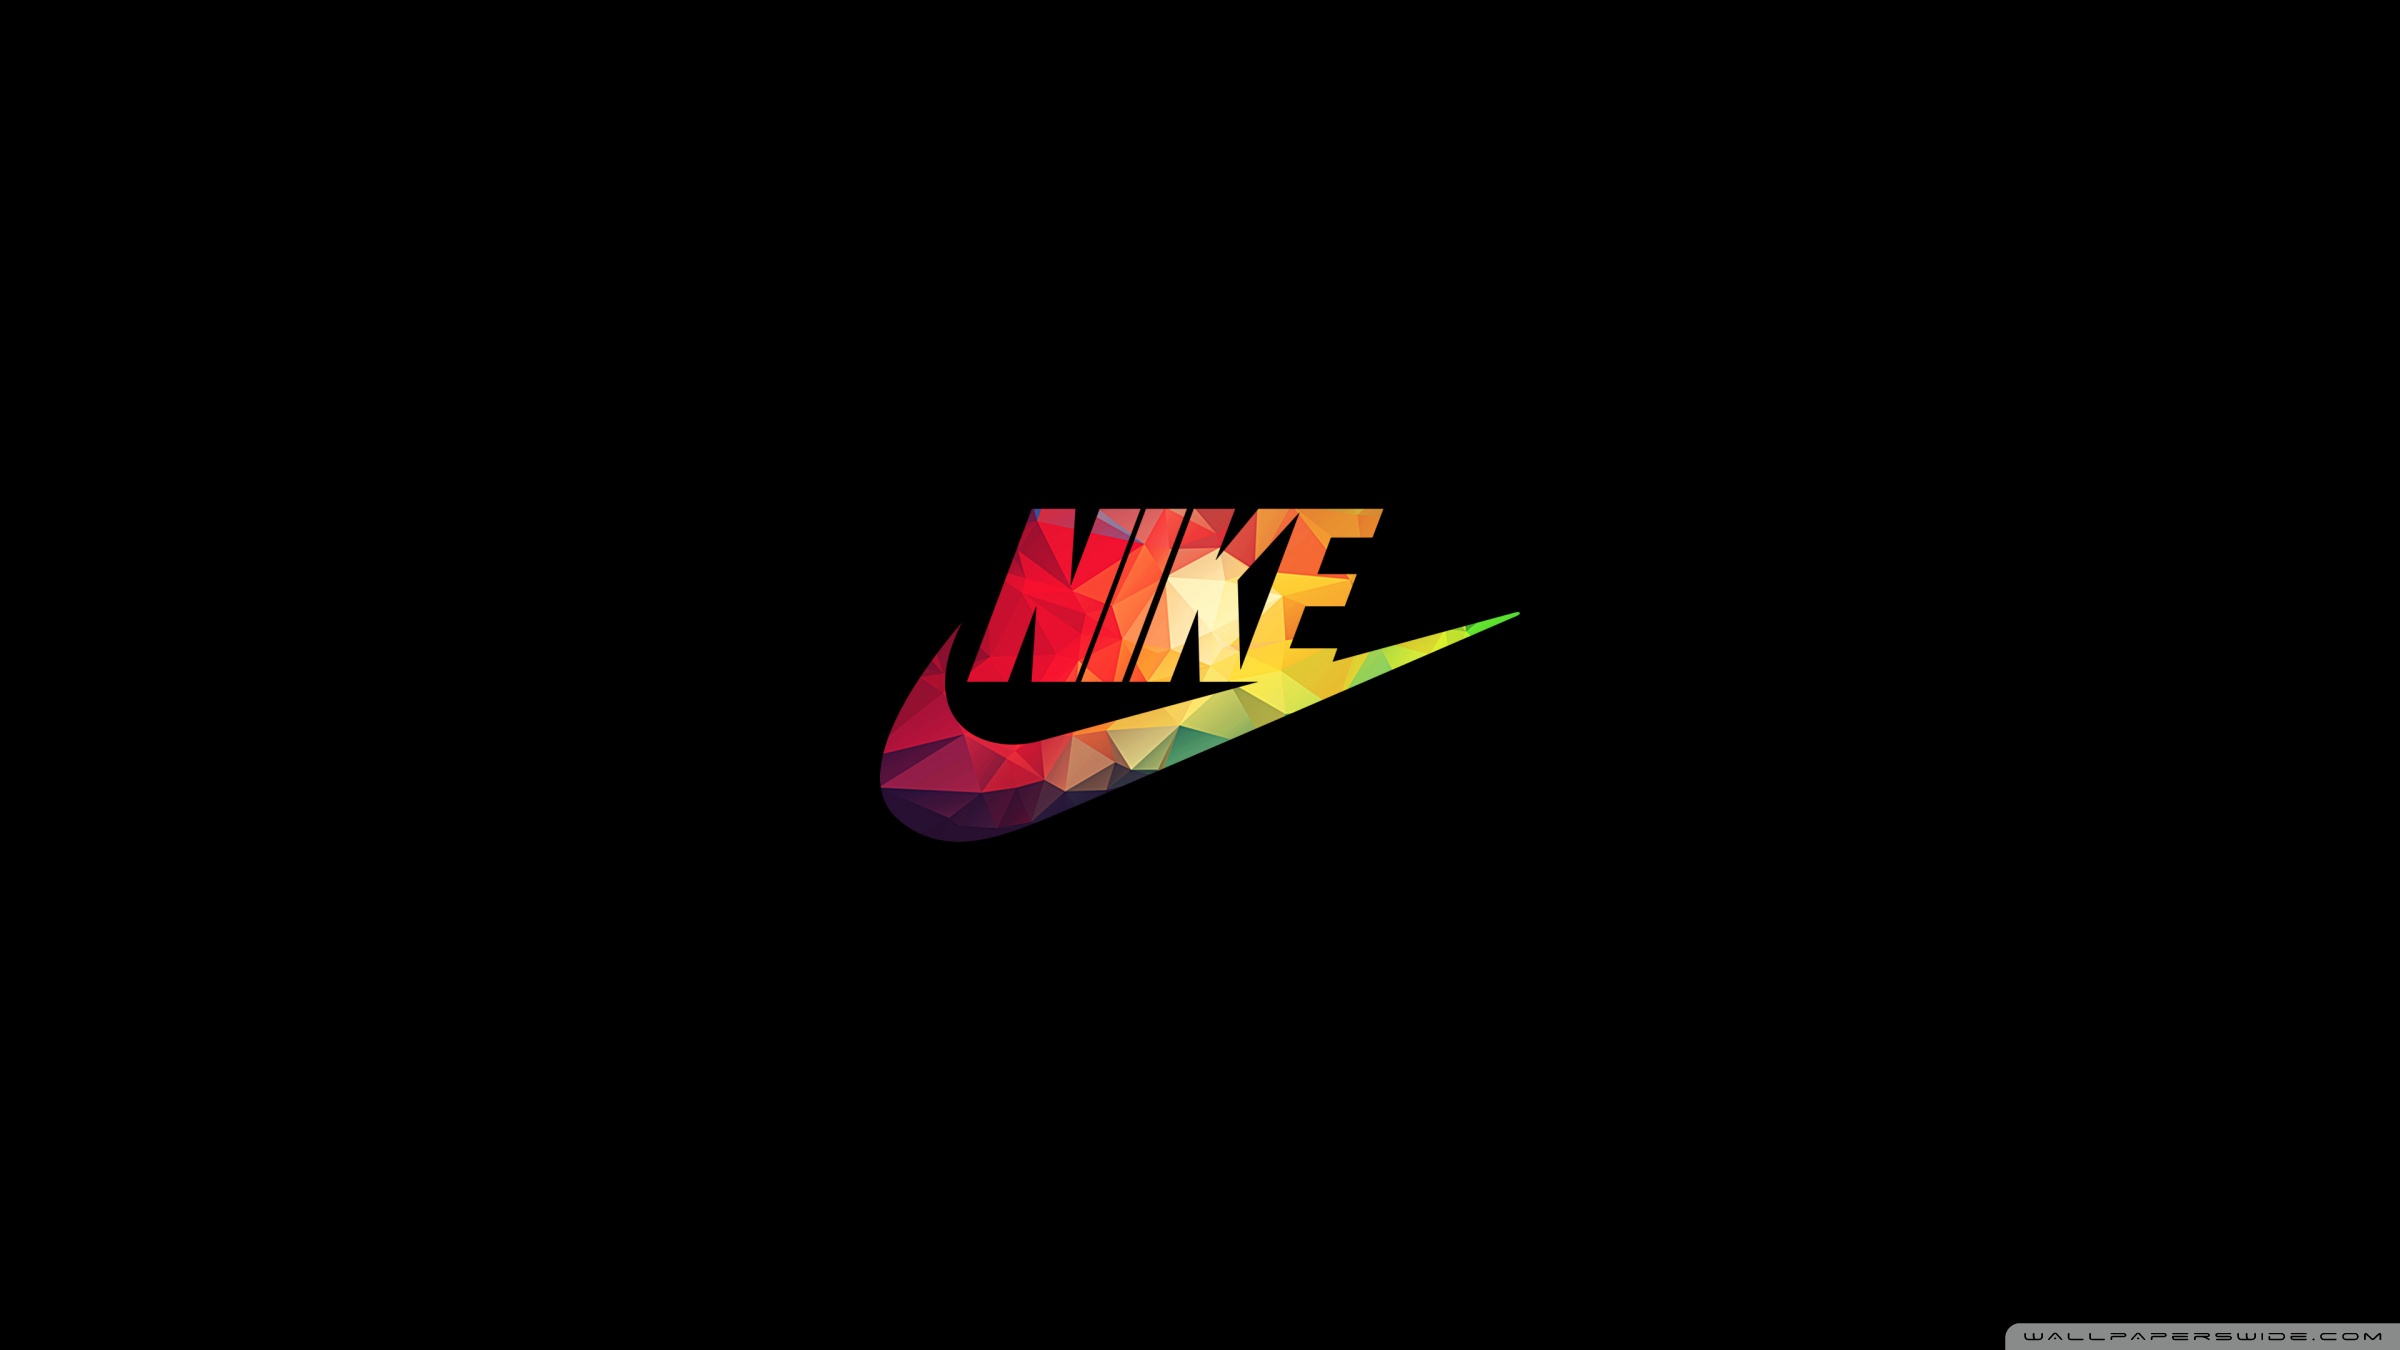 Nike Ultra Hd Desktop Background Wallpaper For Widescreen